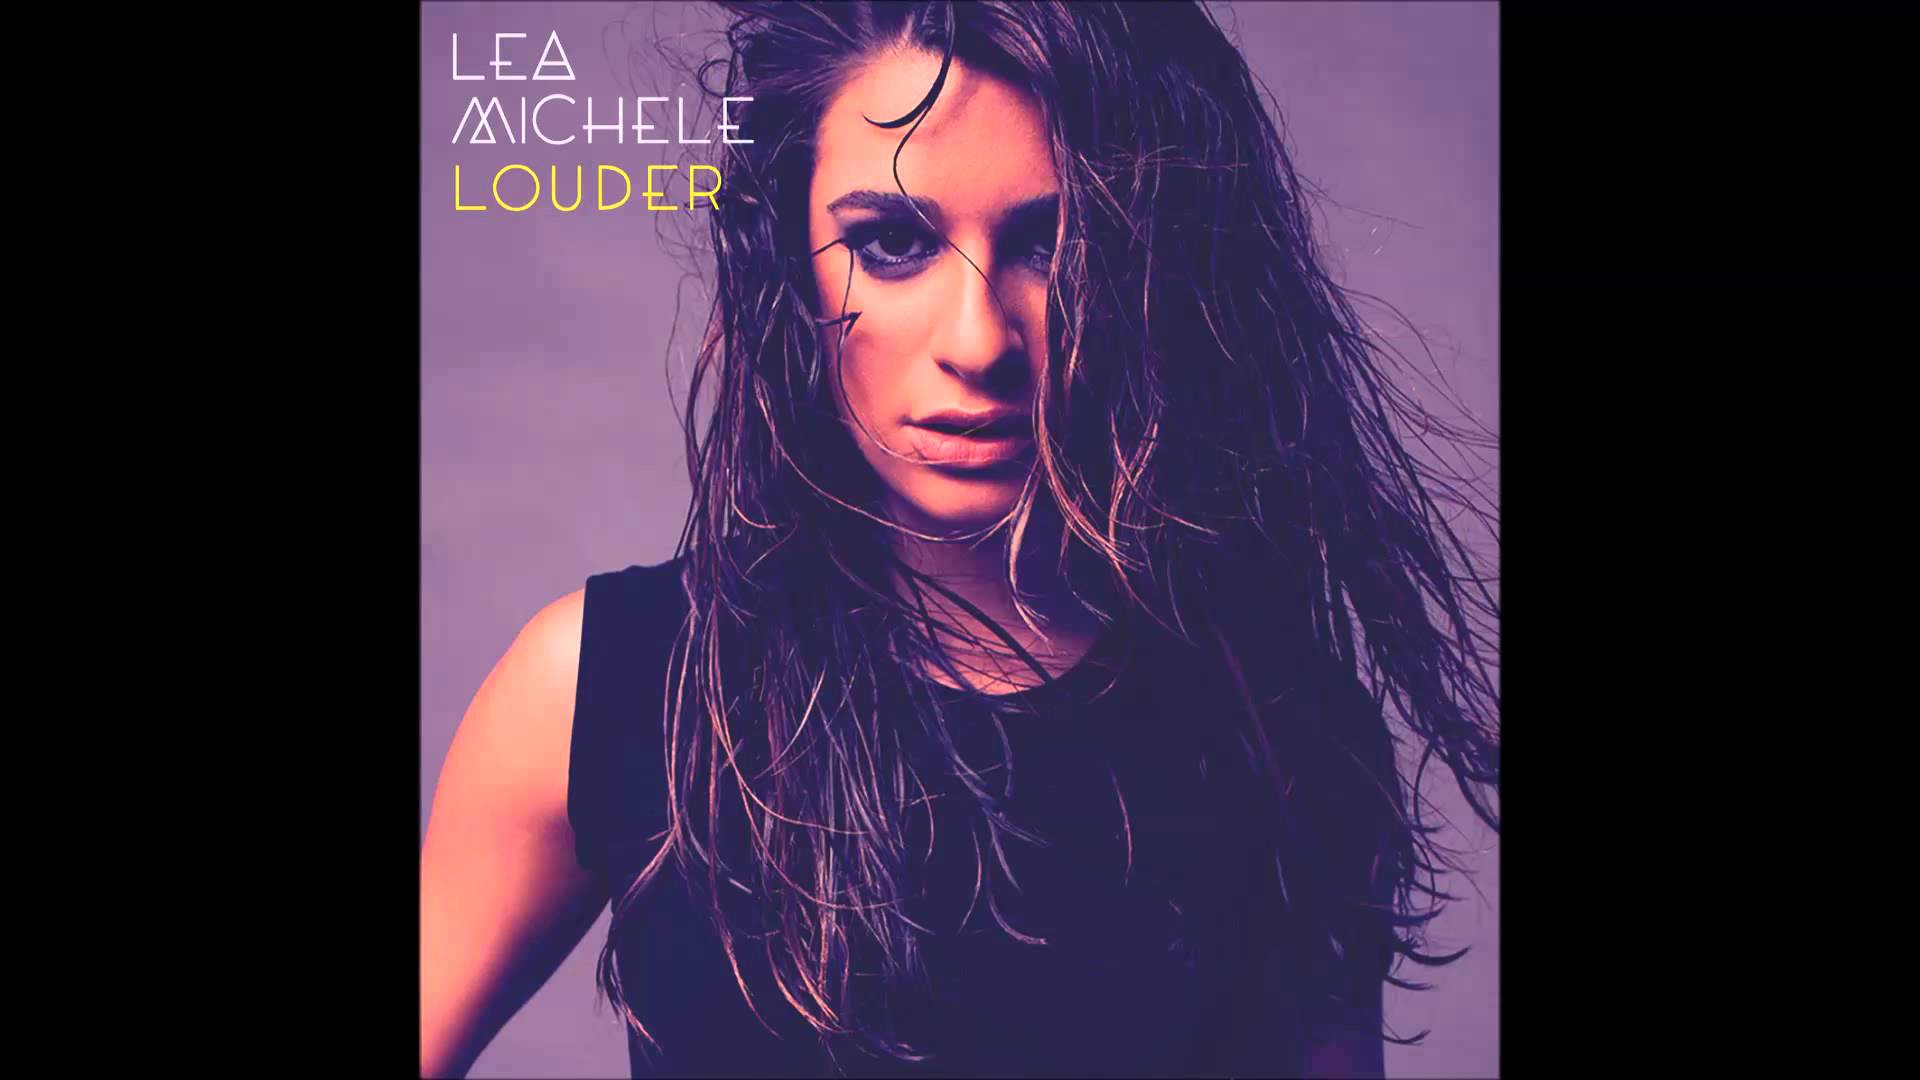 Lea Michele – Thousand Needles